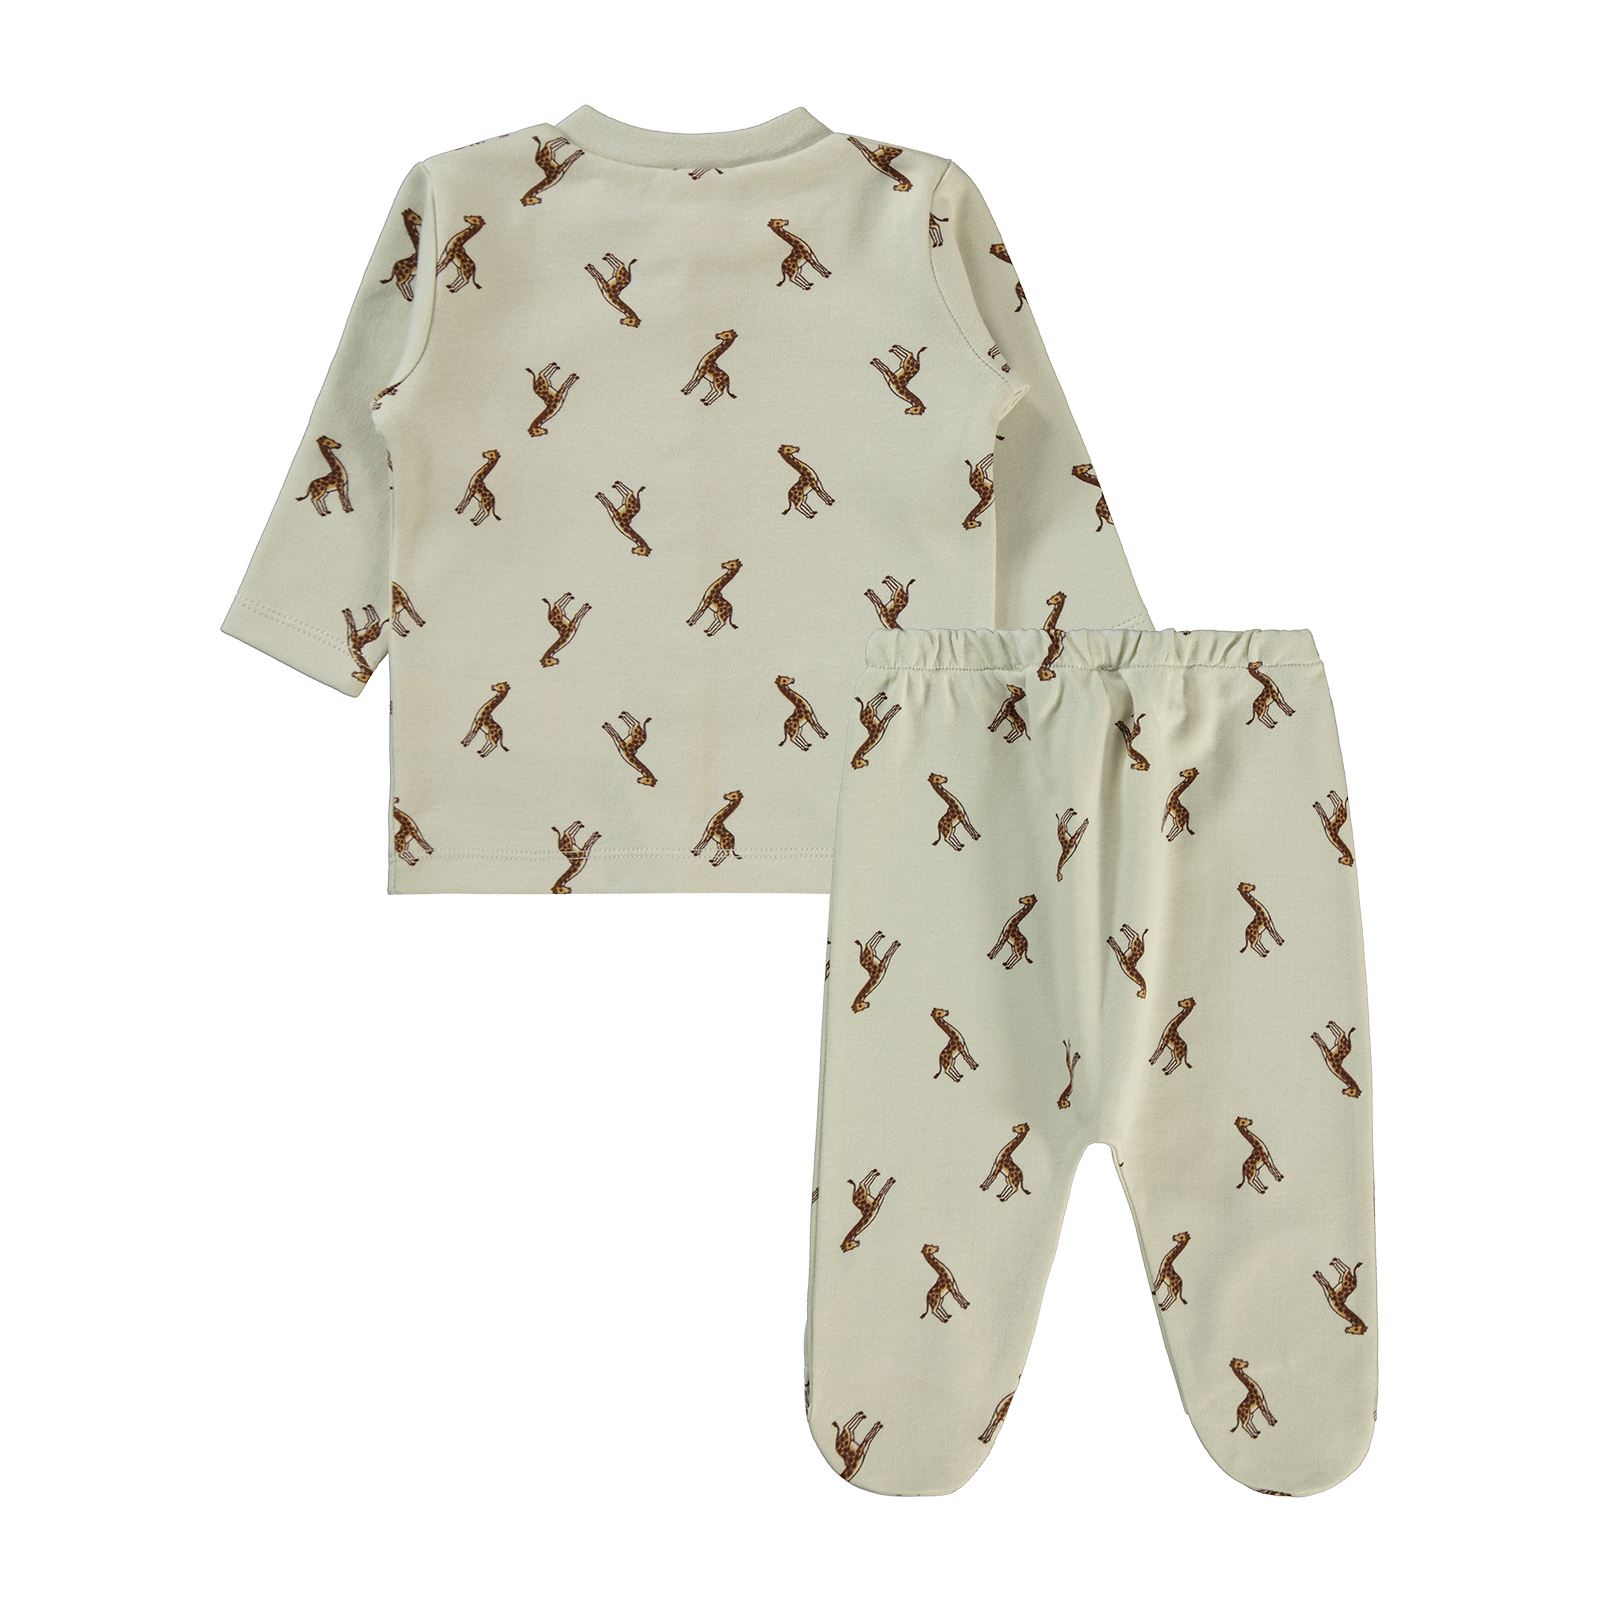 Civil Baby Bebek Pijama Takımı 1-6 Ay Taş Rengi